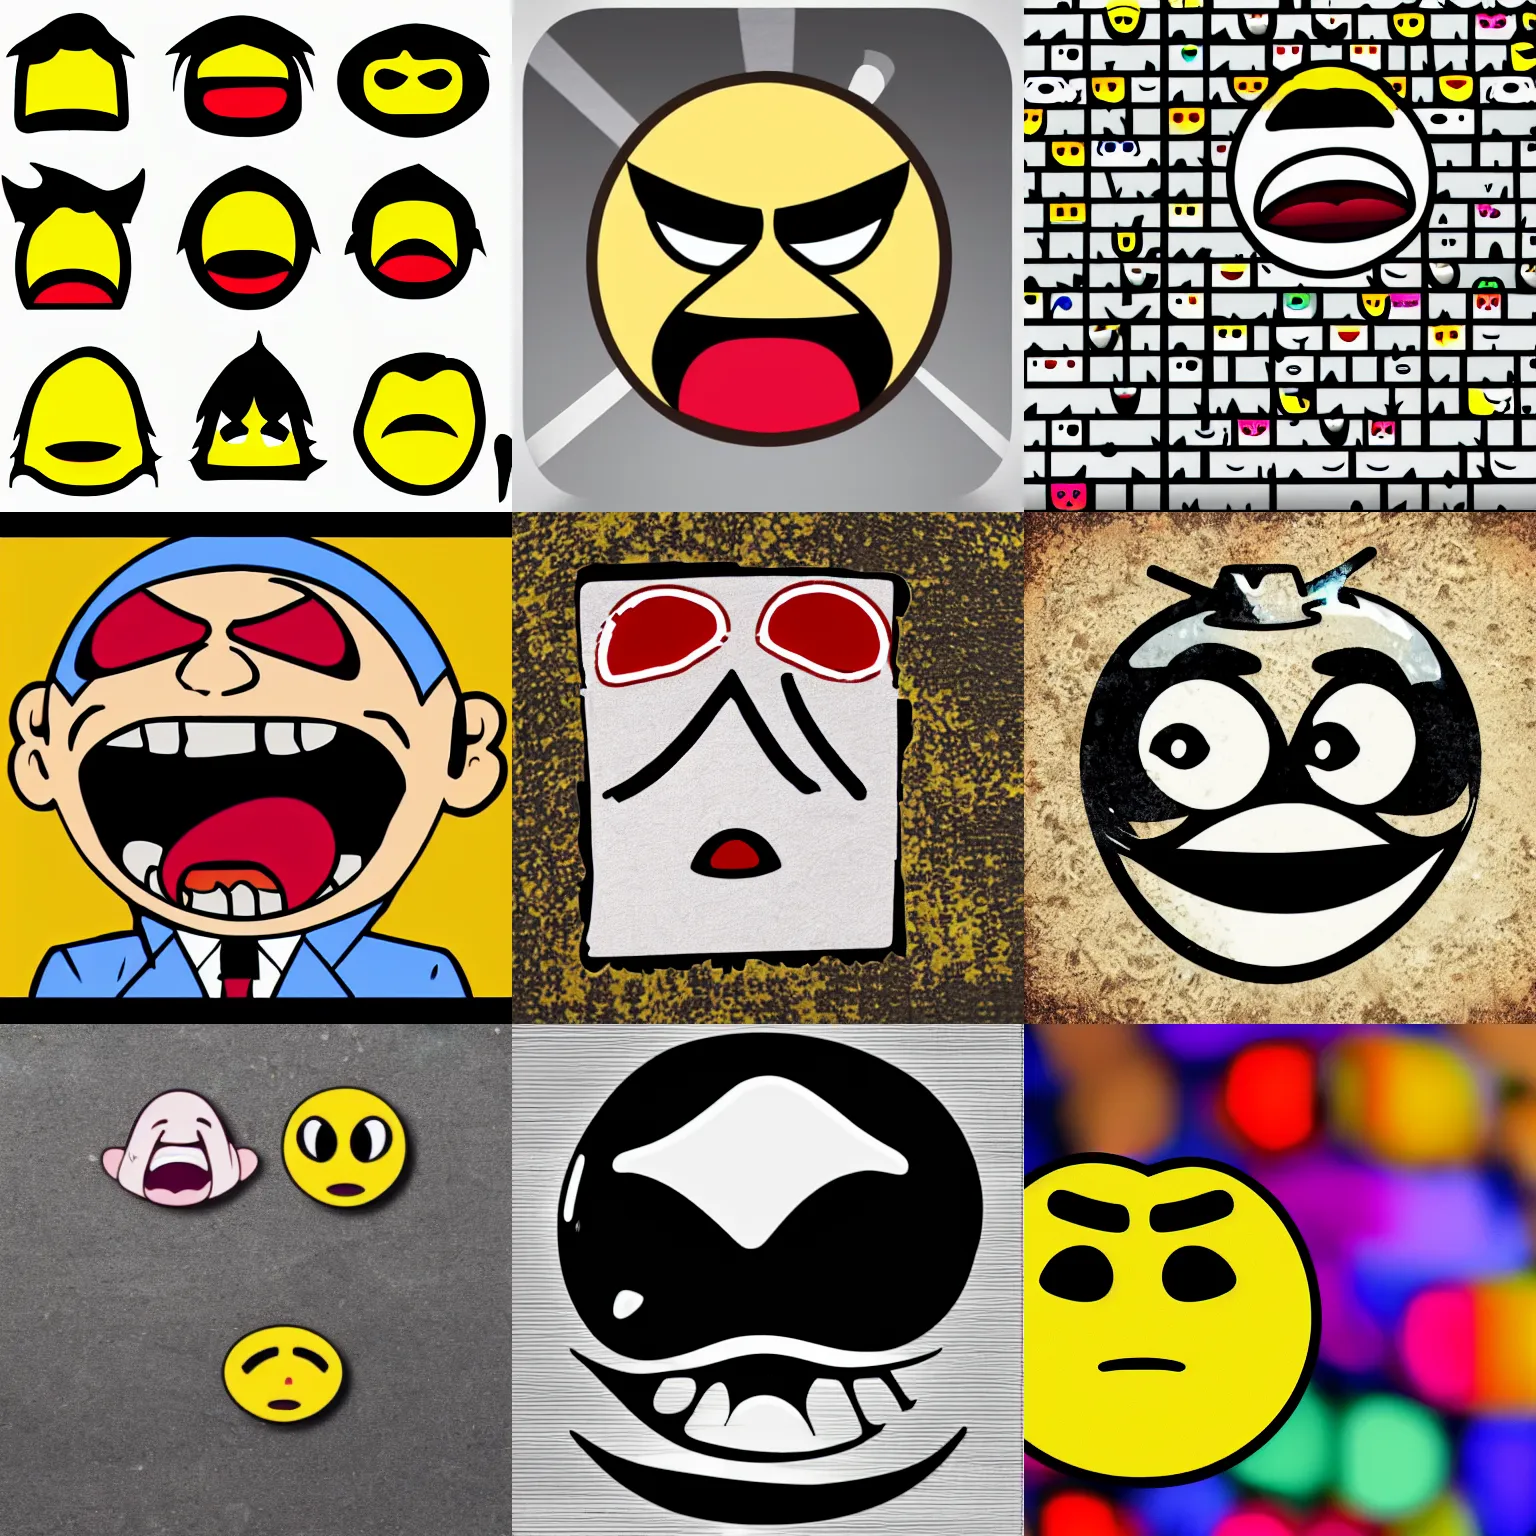 Prompt: angry emoji